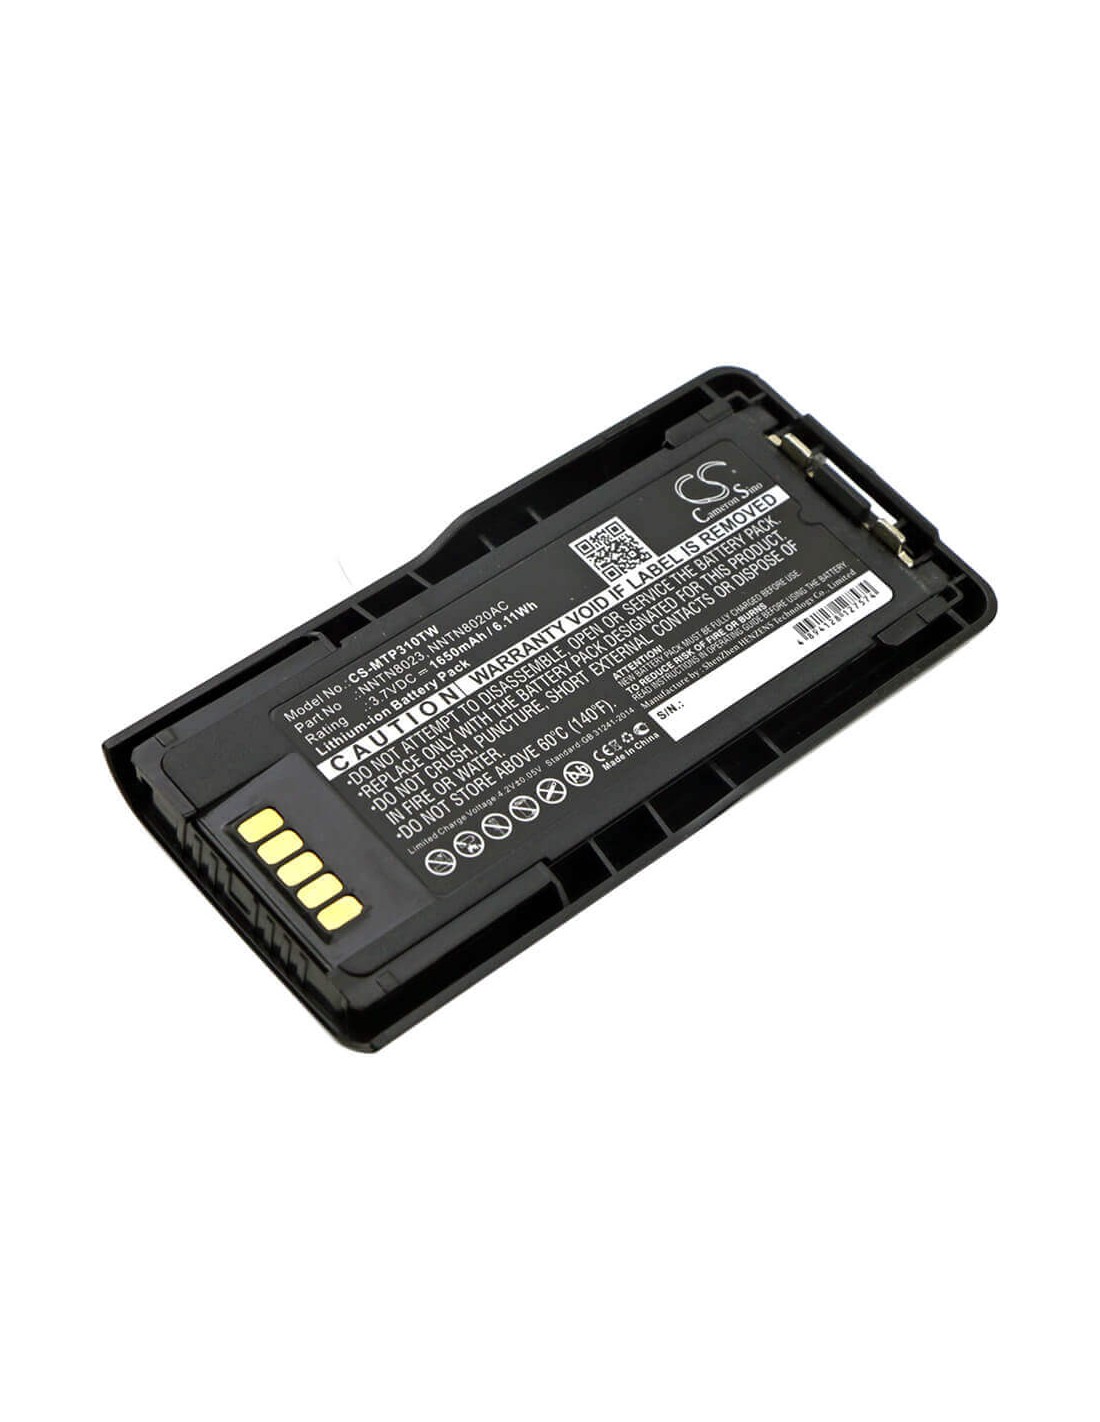 Battery for Motorola Mtp3100, Mtp3200, Mtp3250 3.7V, 1650mAh - 6.11Wh